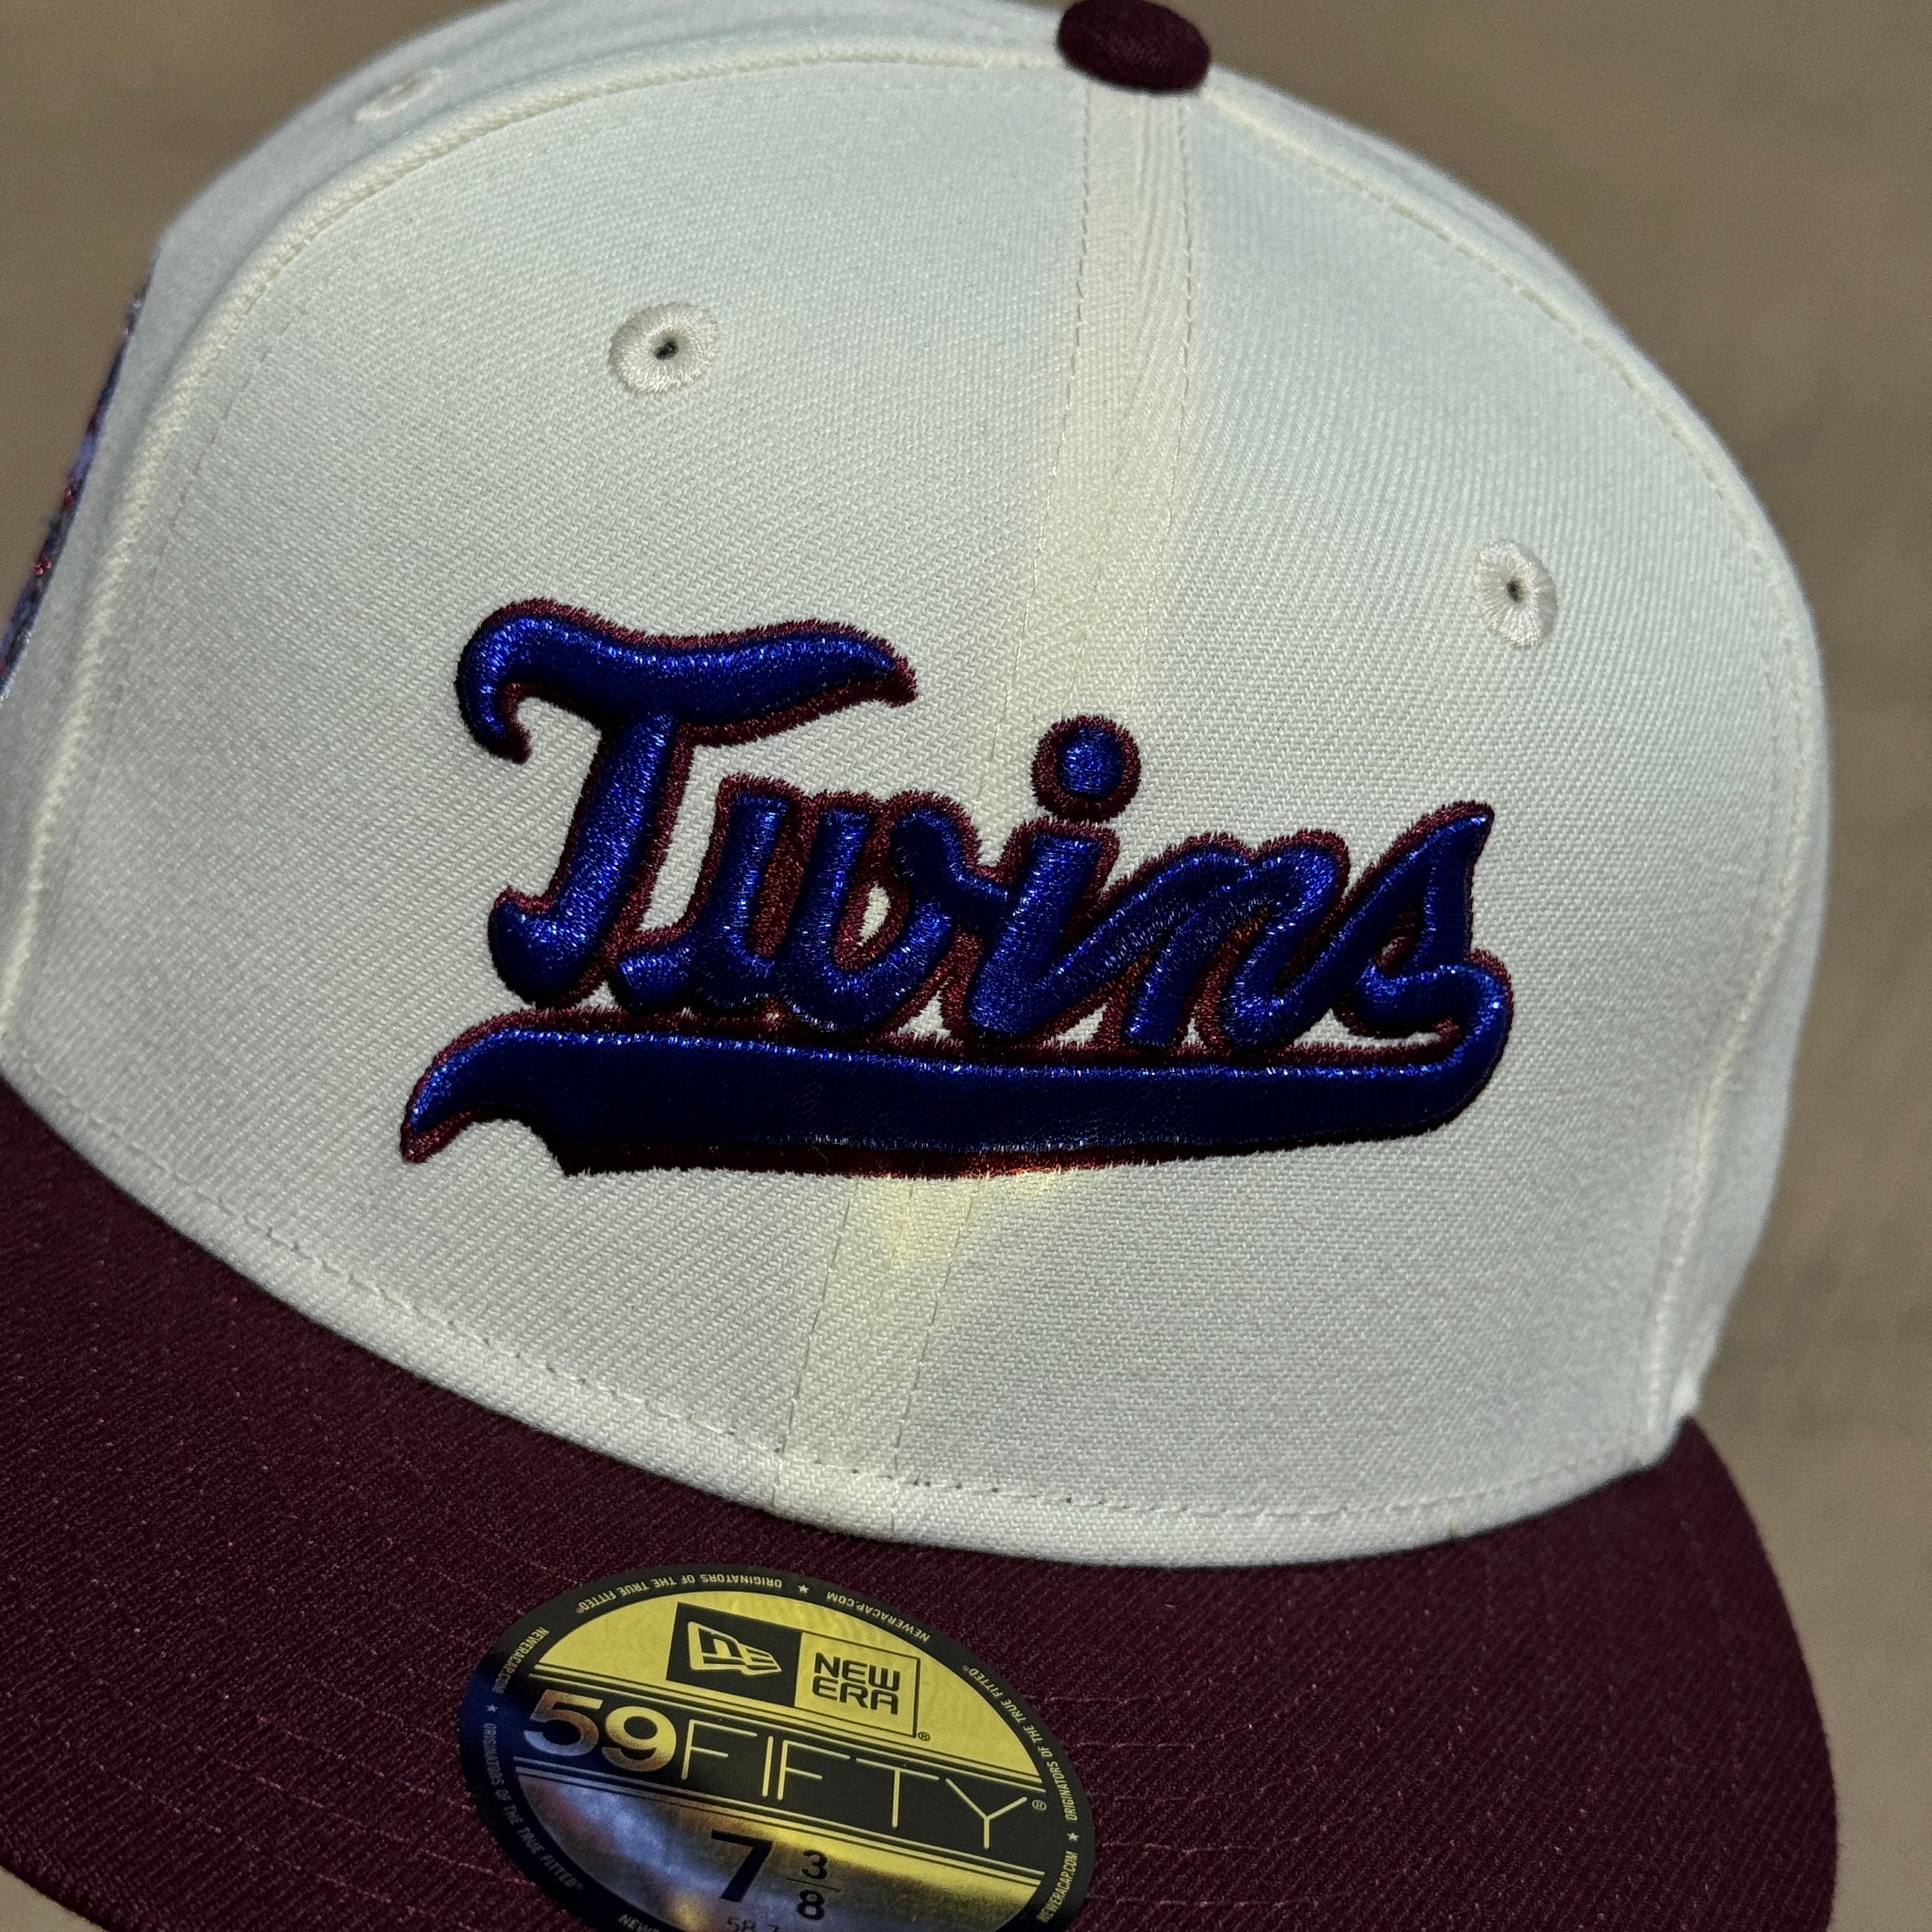 NEW 1/8 Chrome Kansas City Royals Baseball Club 59fifty New Era Fitted Hat Cap